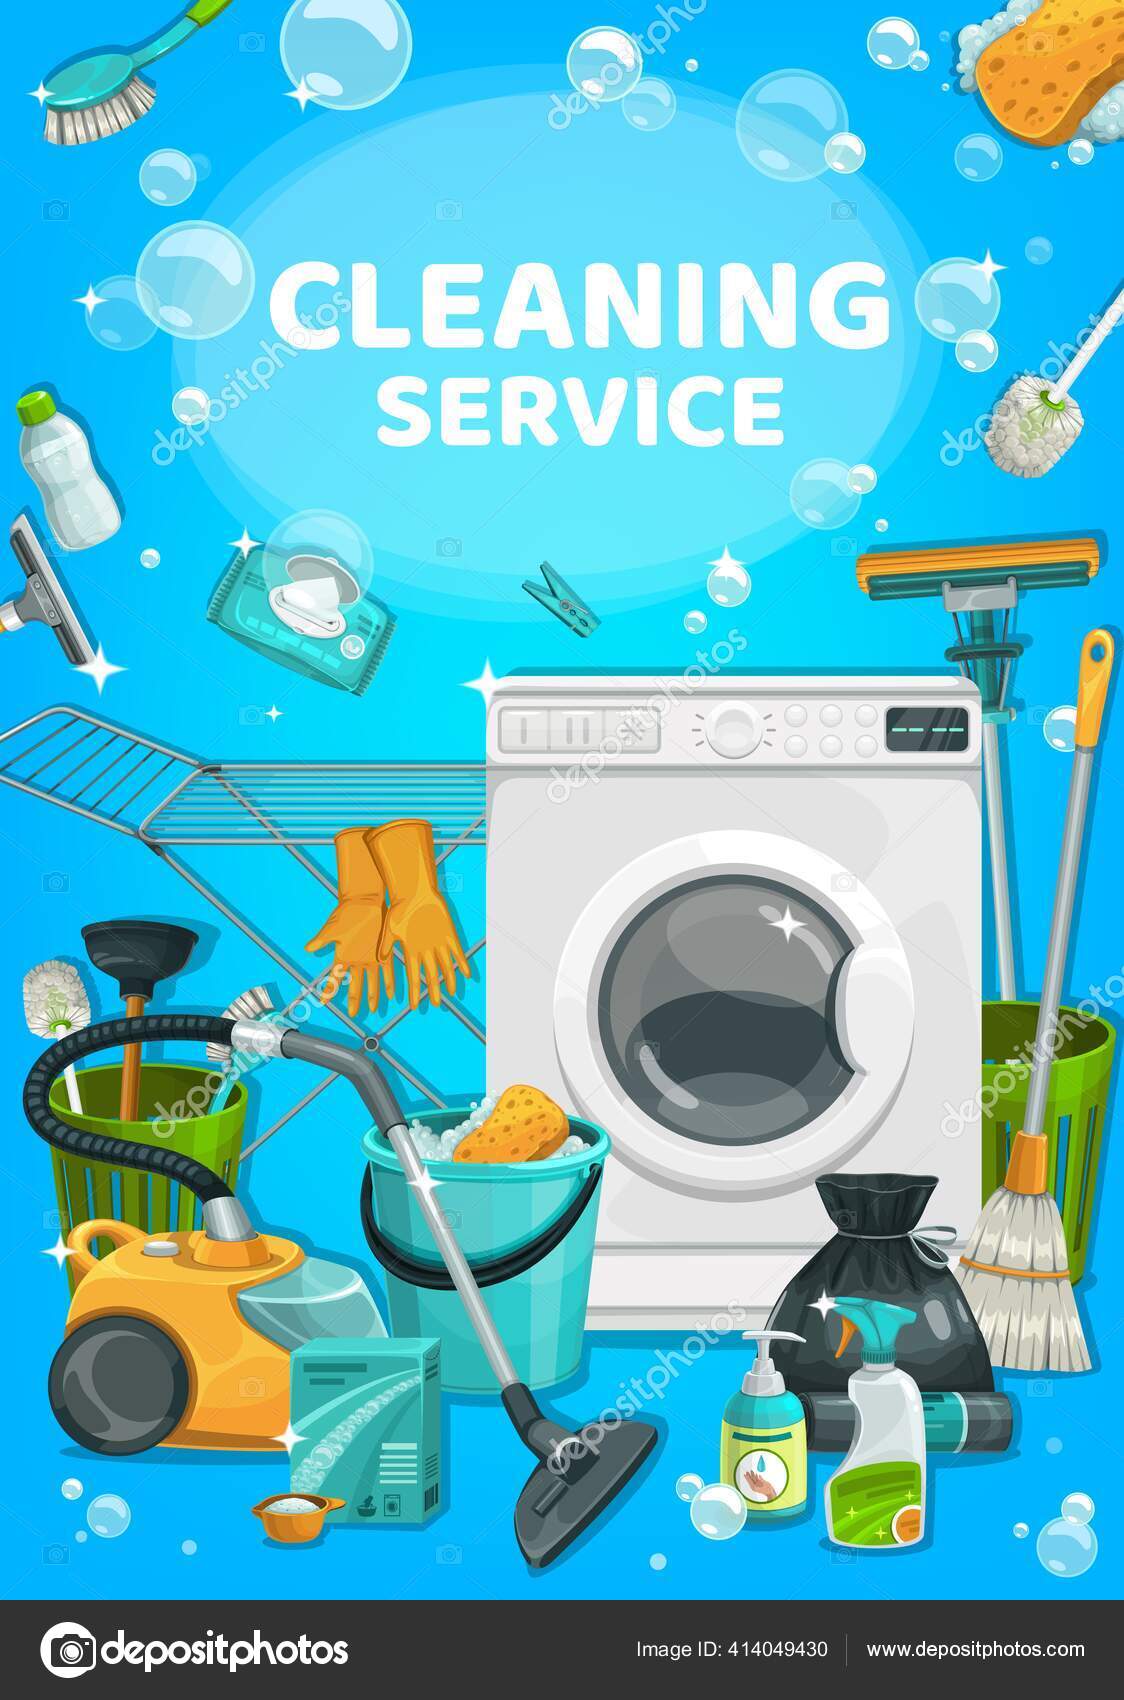 https://st4.depositphotos.com/1020070/41404/v/1600/depositphotos_414049430-stock-illustration-house-cleaning-service-clean-home.jpg